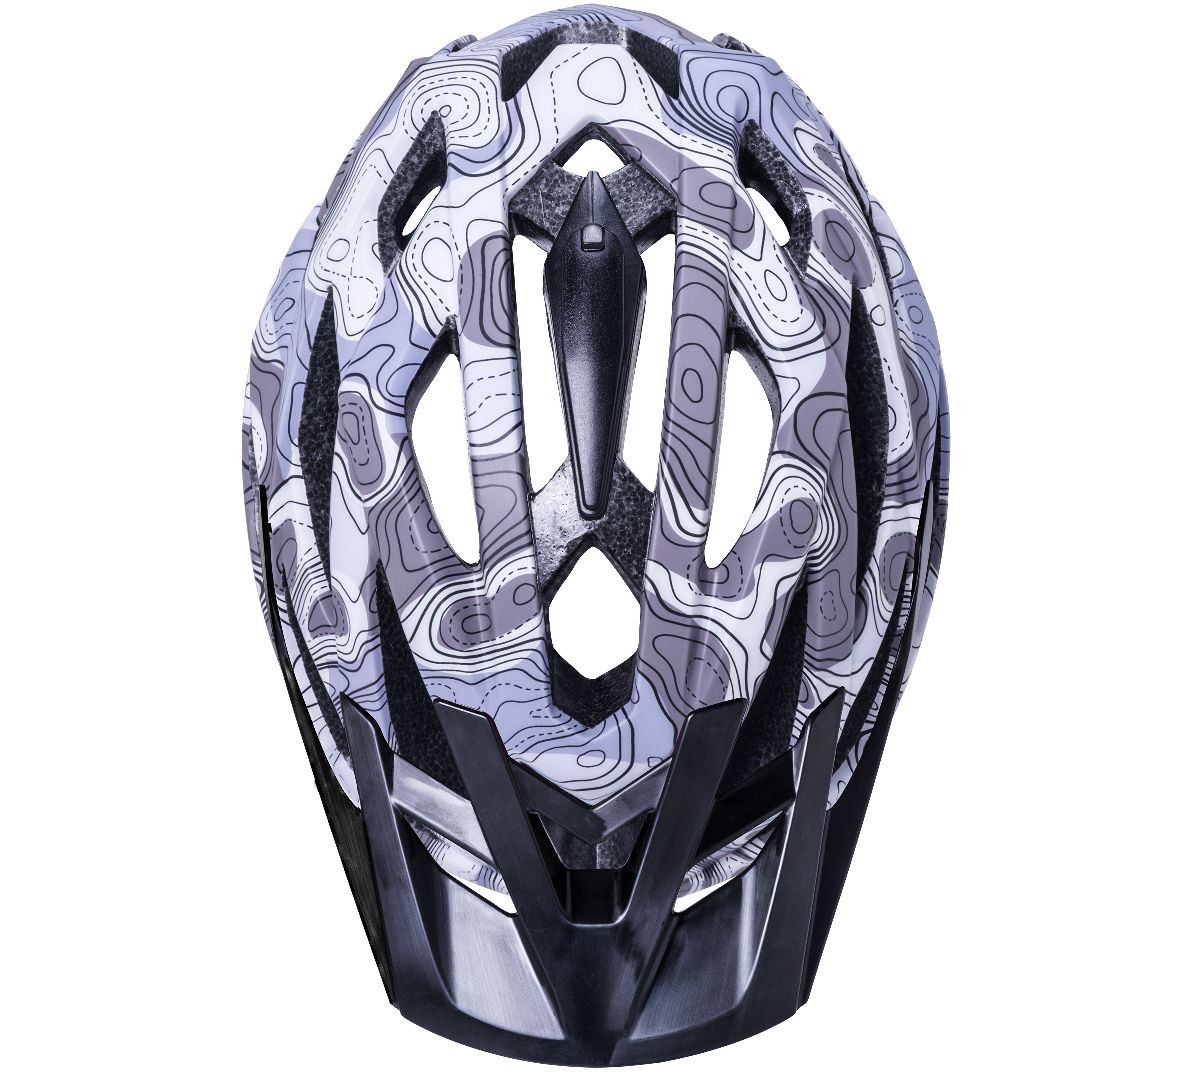 Kali Protectives Lunati Trail Enduro Bike Helmet (S – XL)